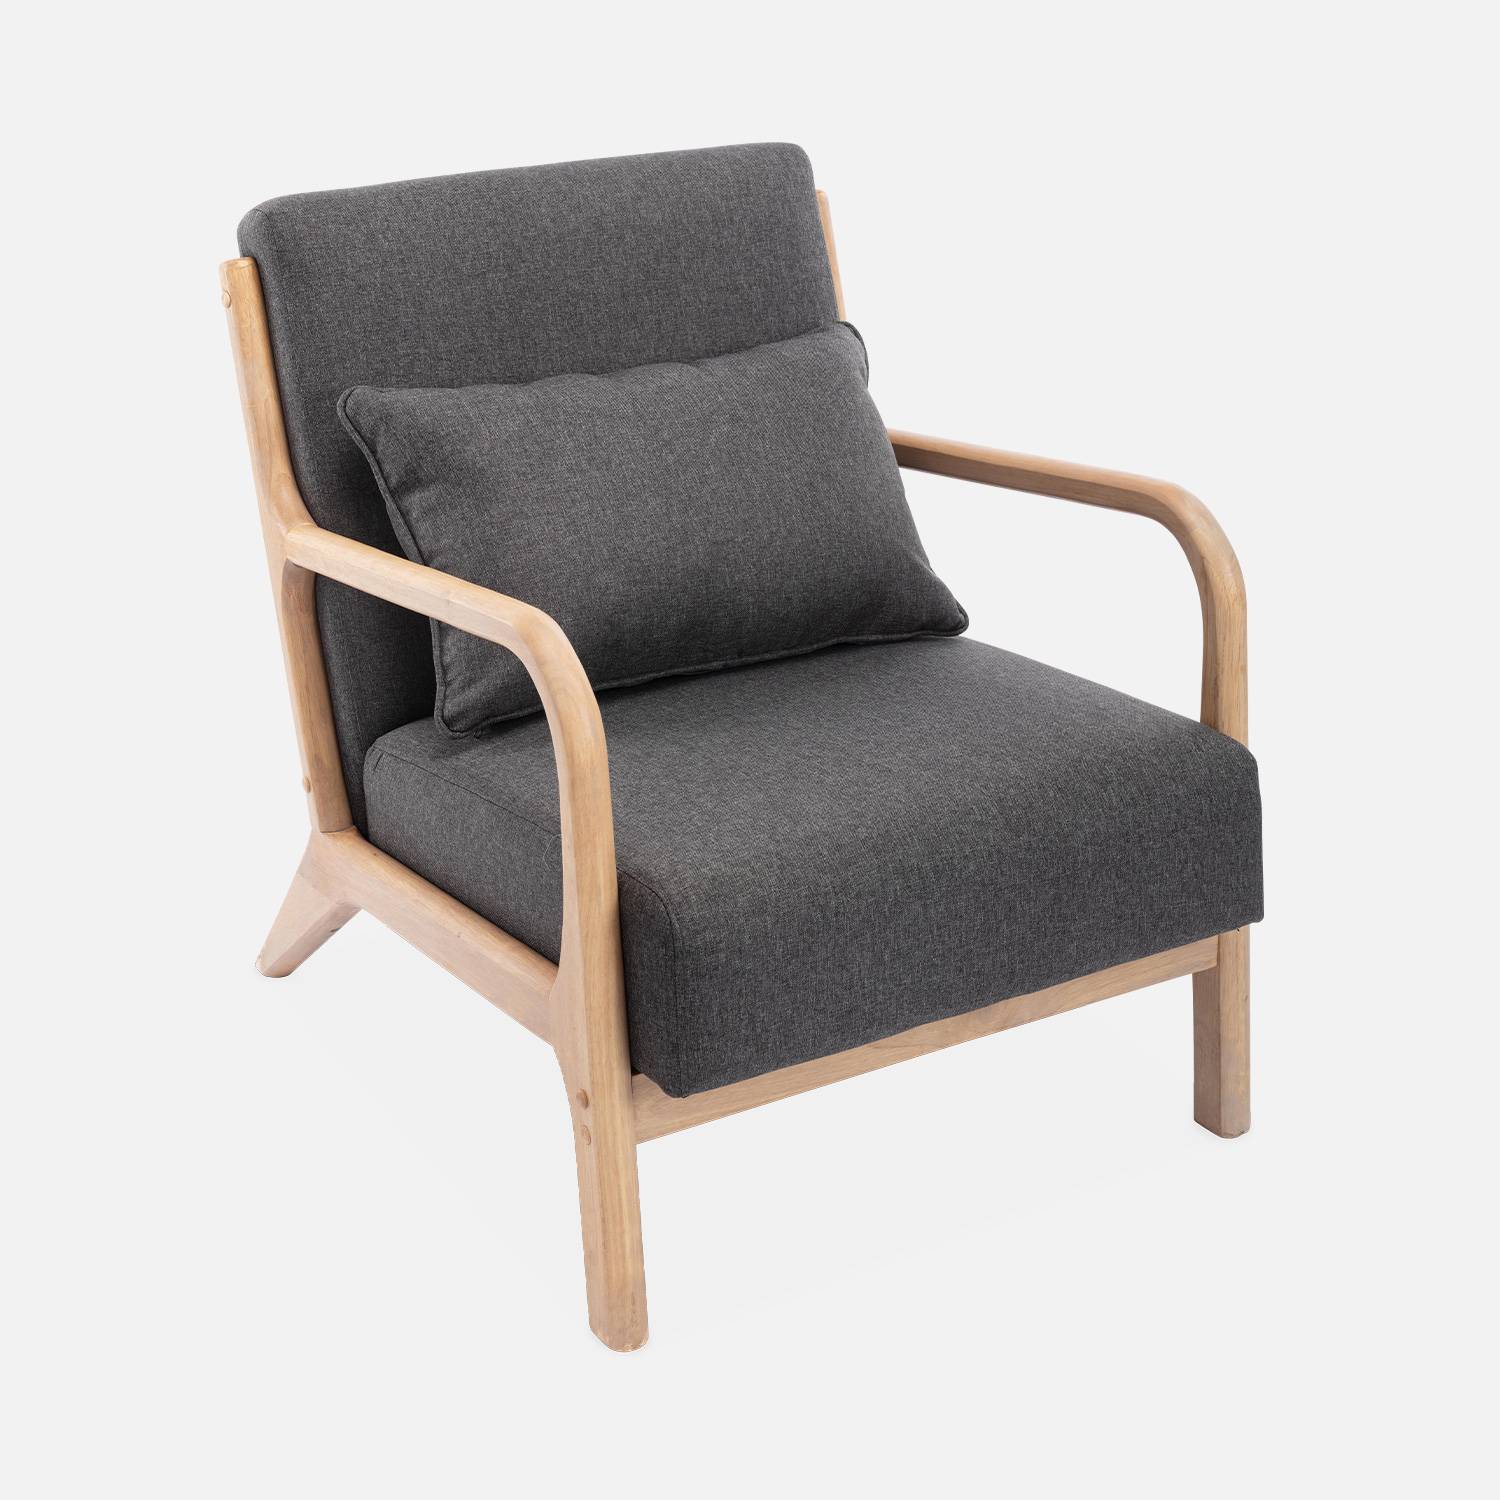 Sillón de diseño de madera y tela, 1 asiento recto fijo, patas de compás escandinavas, armazón de madera maciza, asiento cómodo, gris oscuro Photo4